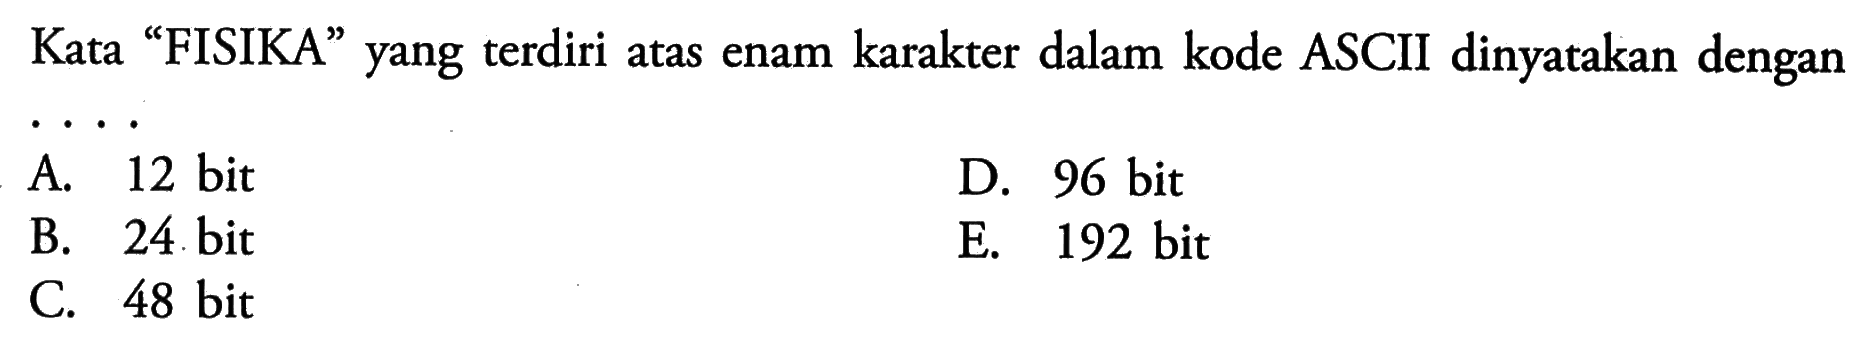 Kata 'FISIKA' yang terdiri atas enam karakter dalam kode ASCII dinyatakan denganA.  12 bit D.  96 bit B.  24 bit E. 192 bitC.  48 bit 